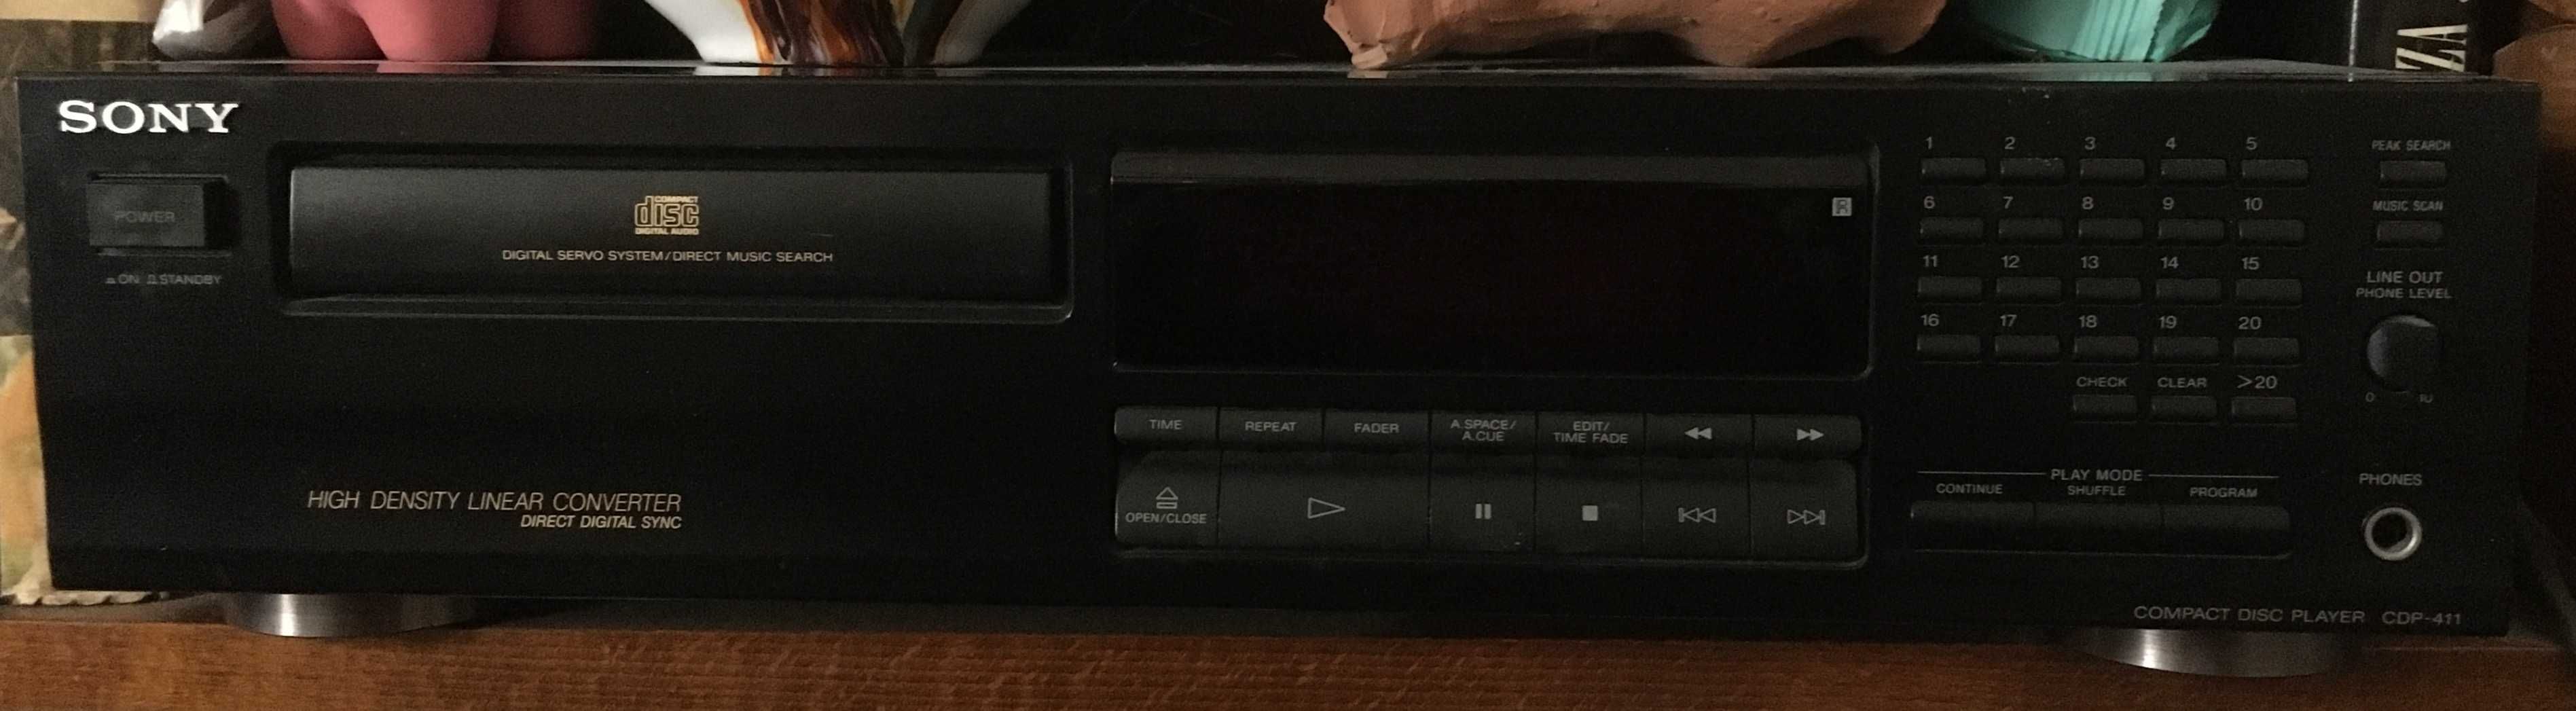 CD player Sony CDP-411